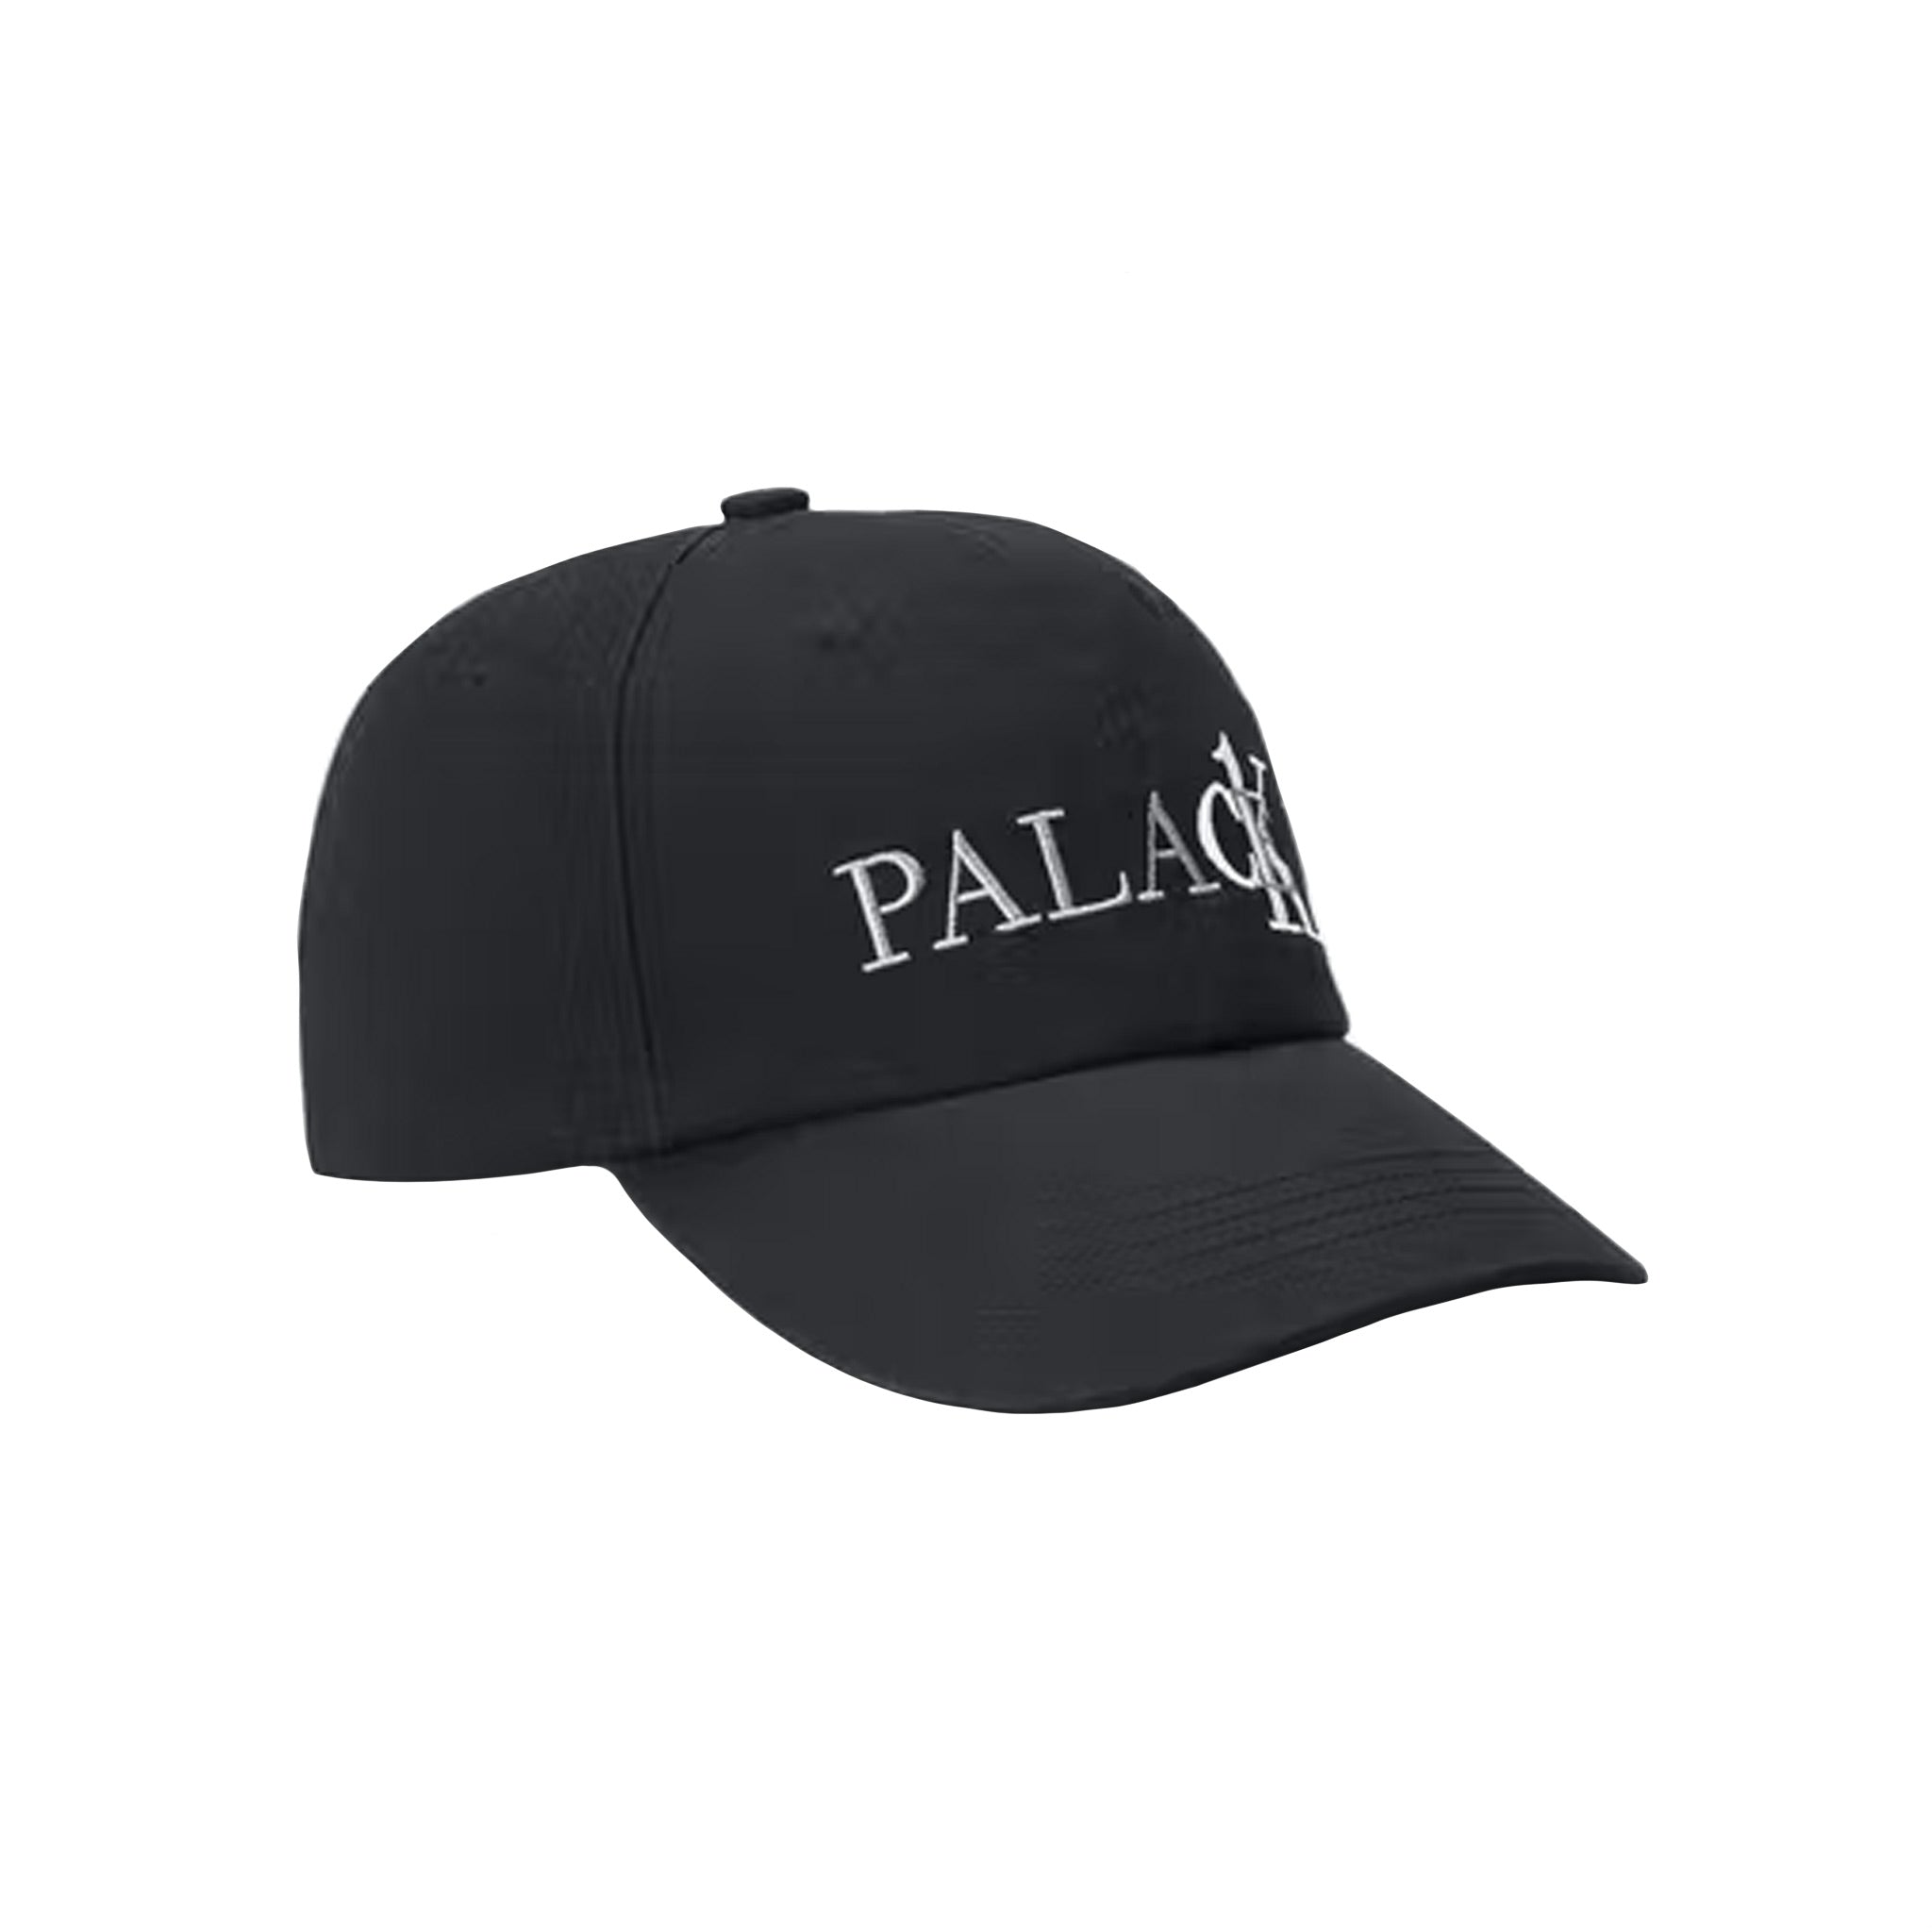 Calvin Klein x Palace CK1 Cap - Black SIDE | Australia New Zealand